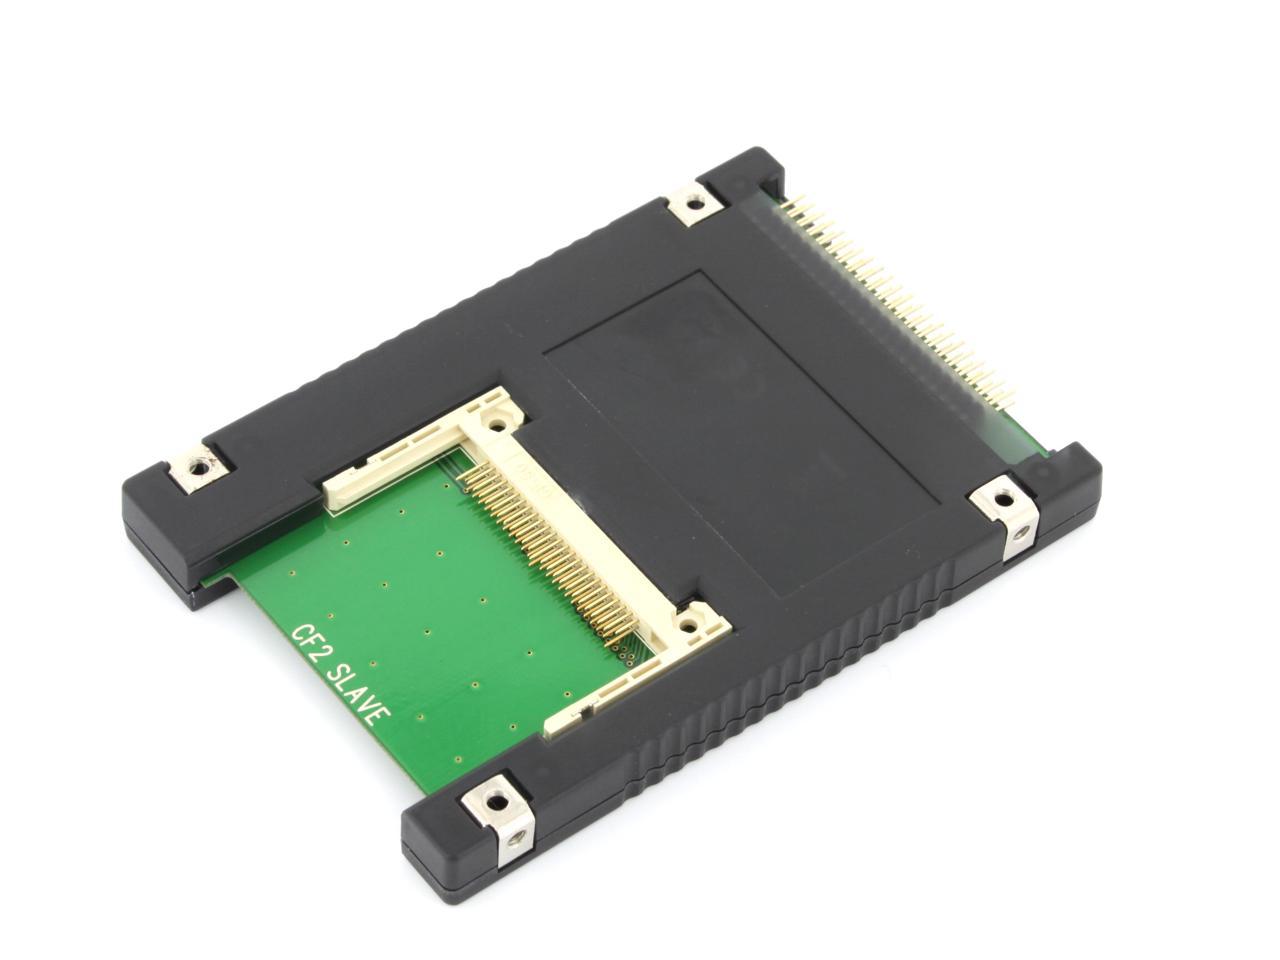 Syba SD-ADA45006 Dual Compact Flash to 44 Pin IDE 2.5" Adapter Enclosure Black 